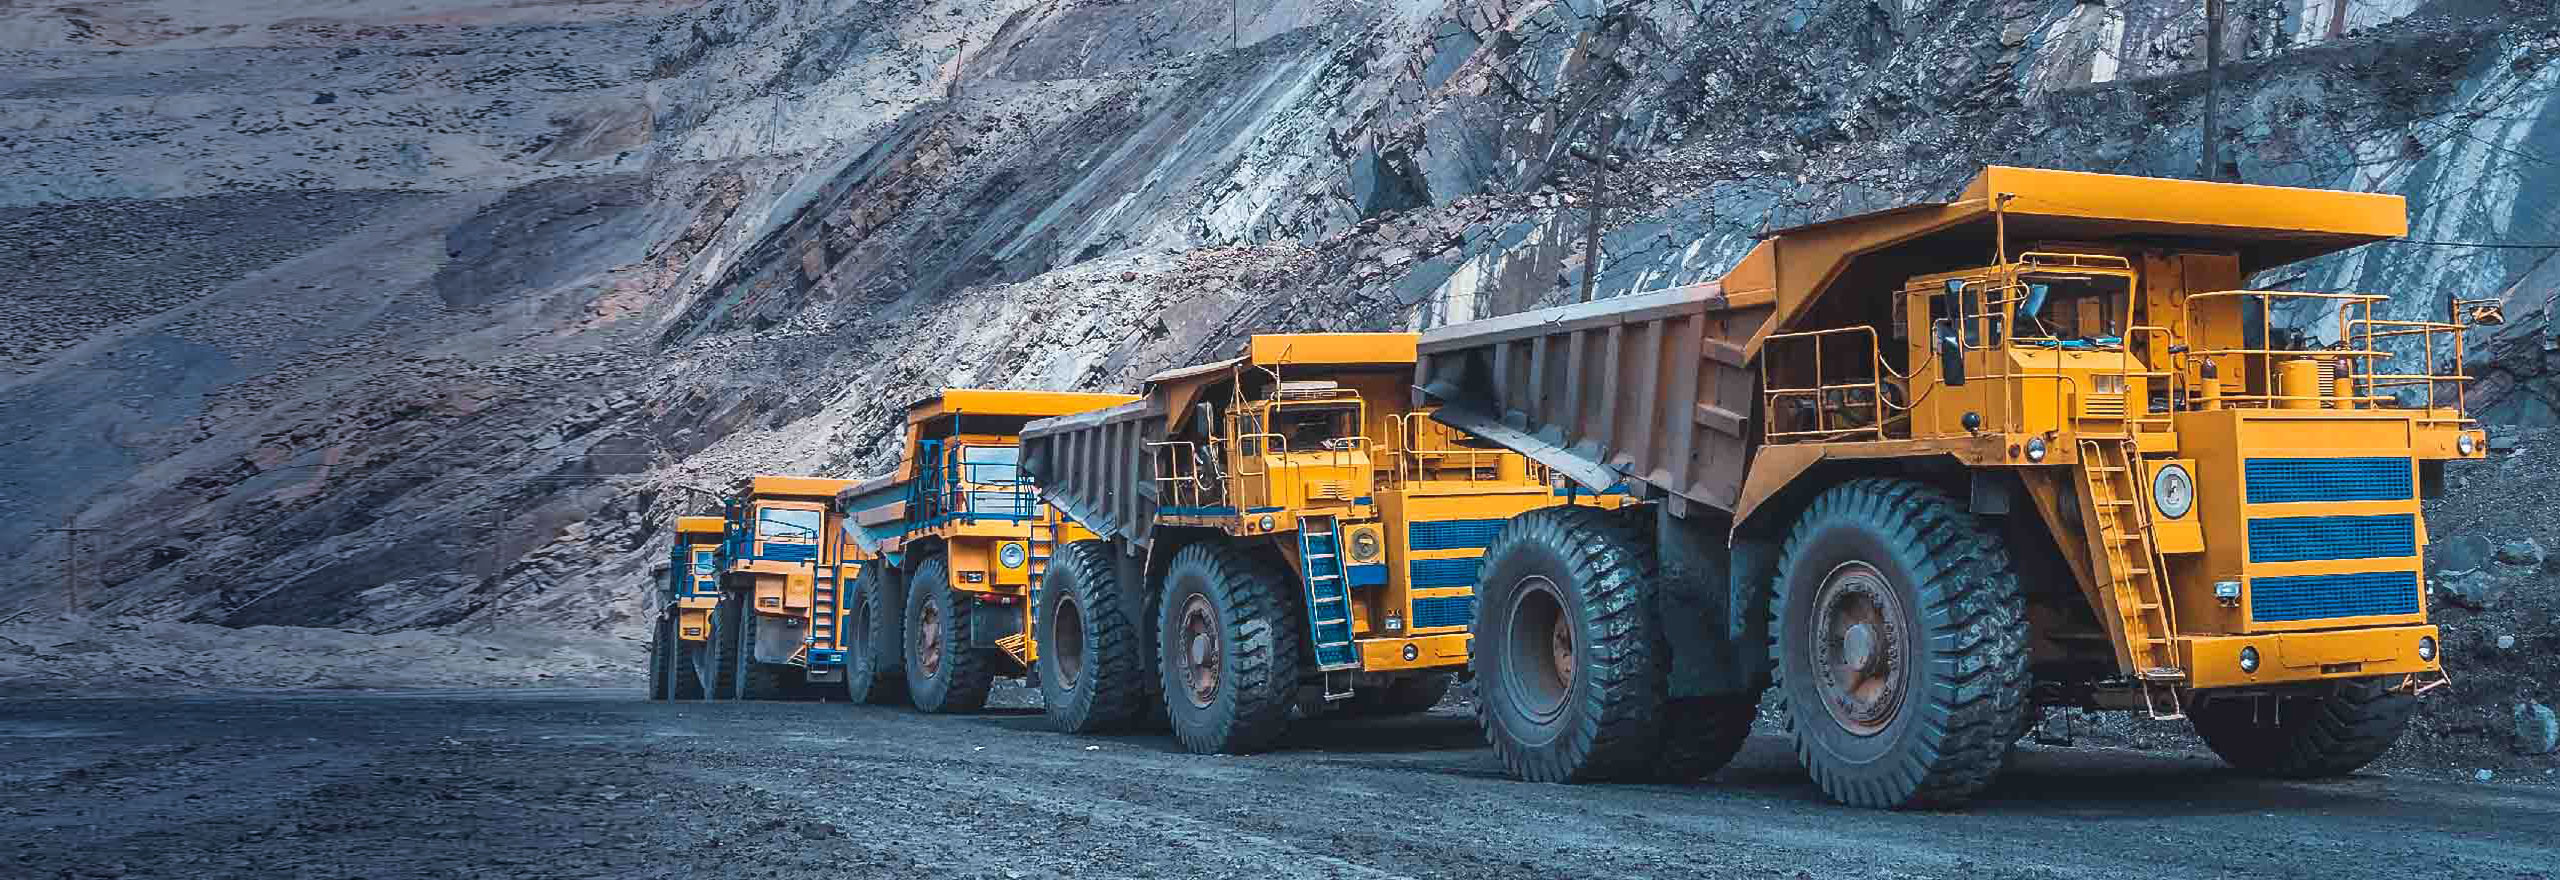 camiones de transporte en una carretera minera